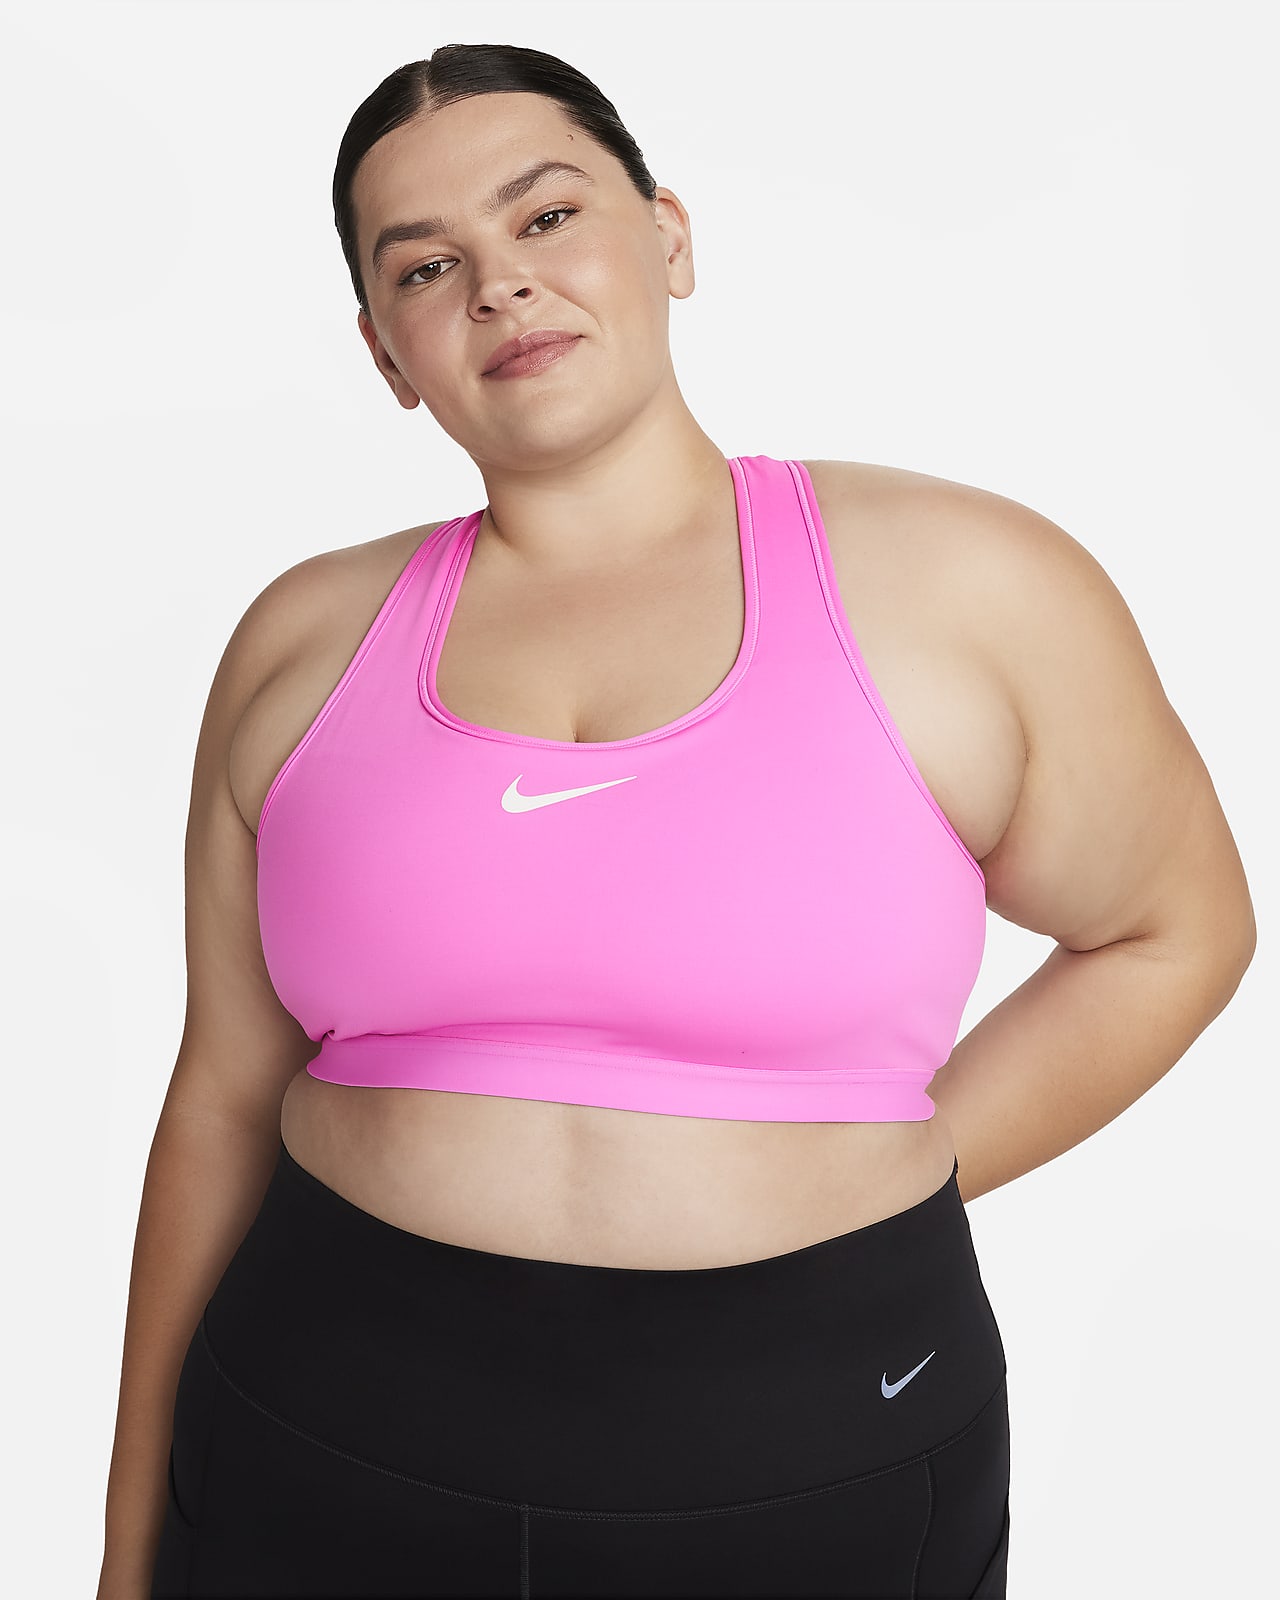 Nike Size S Sports Bras for Women